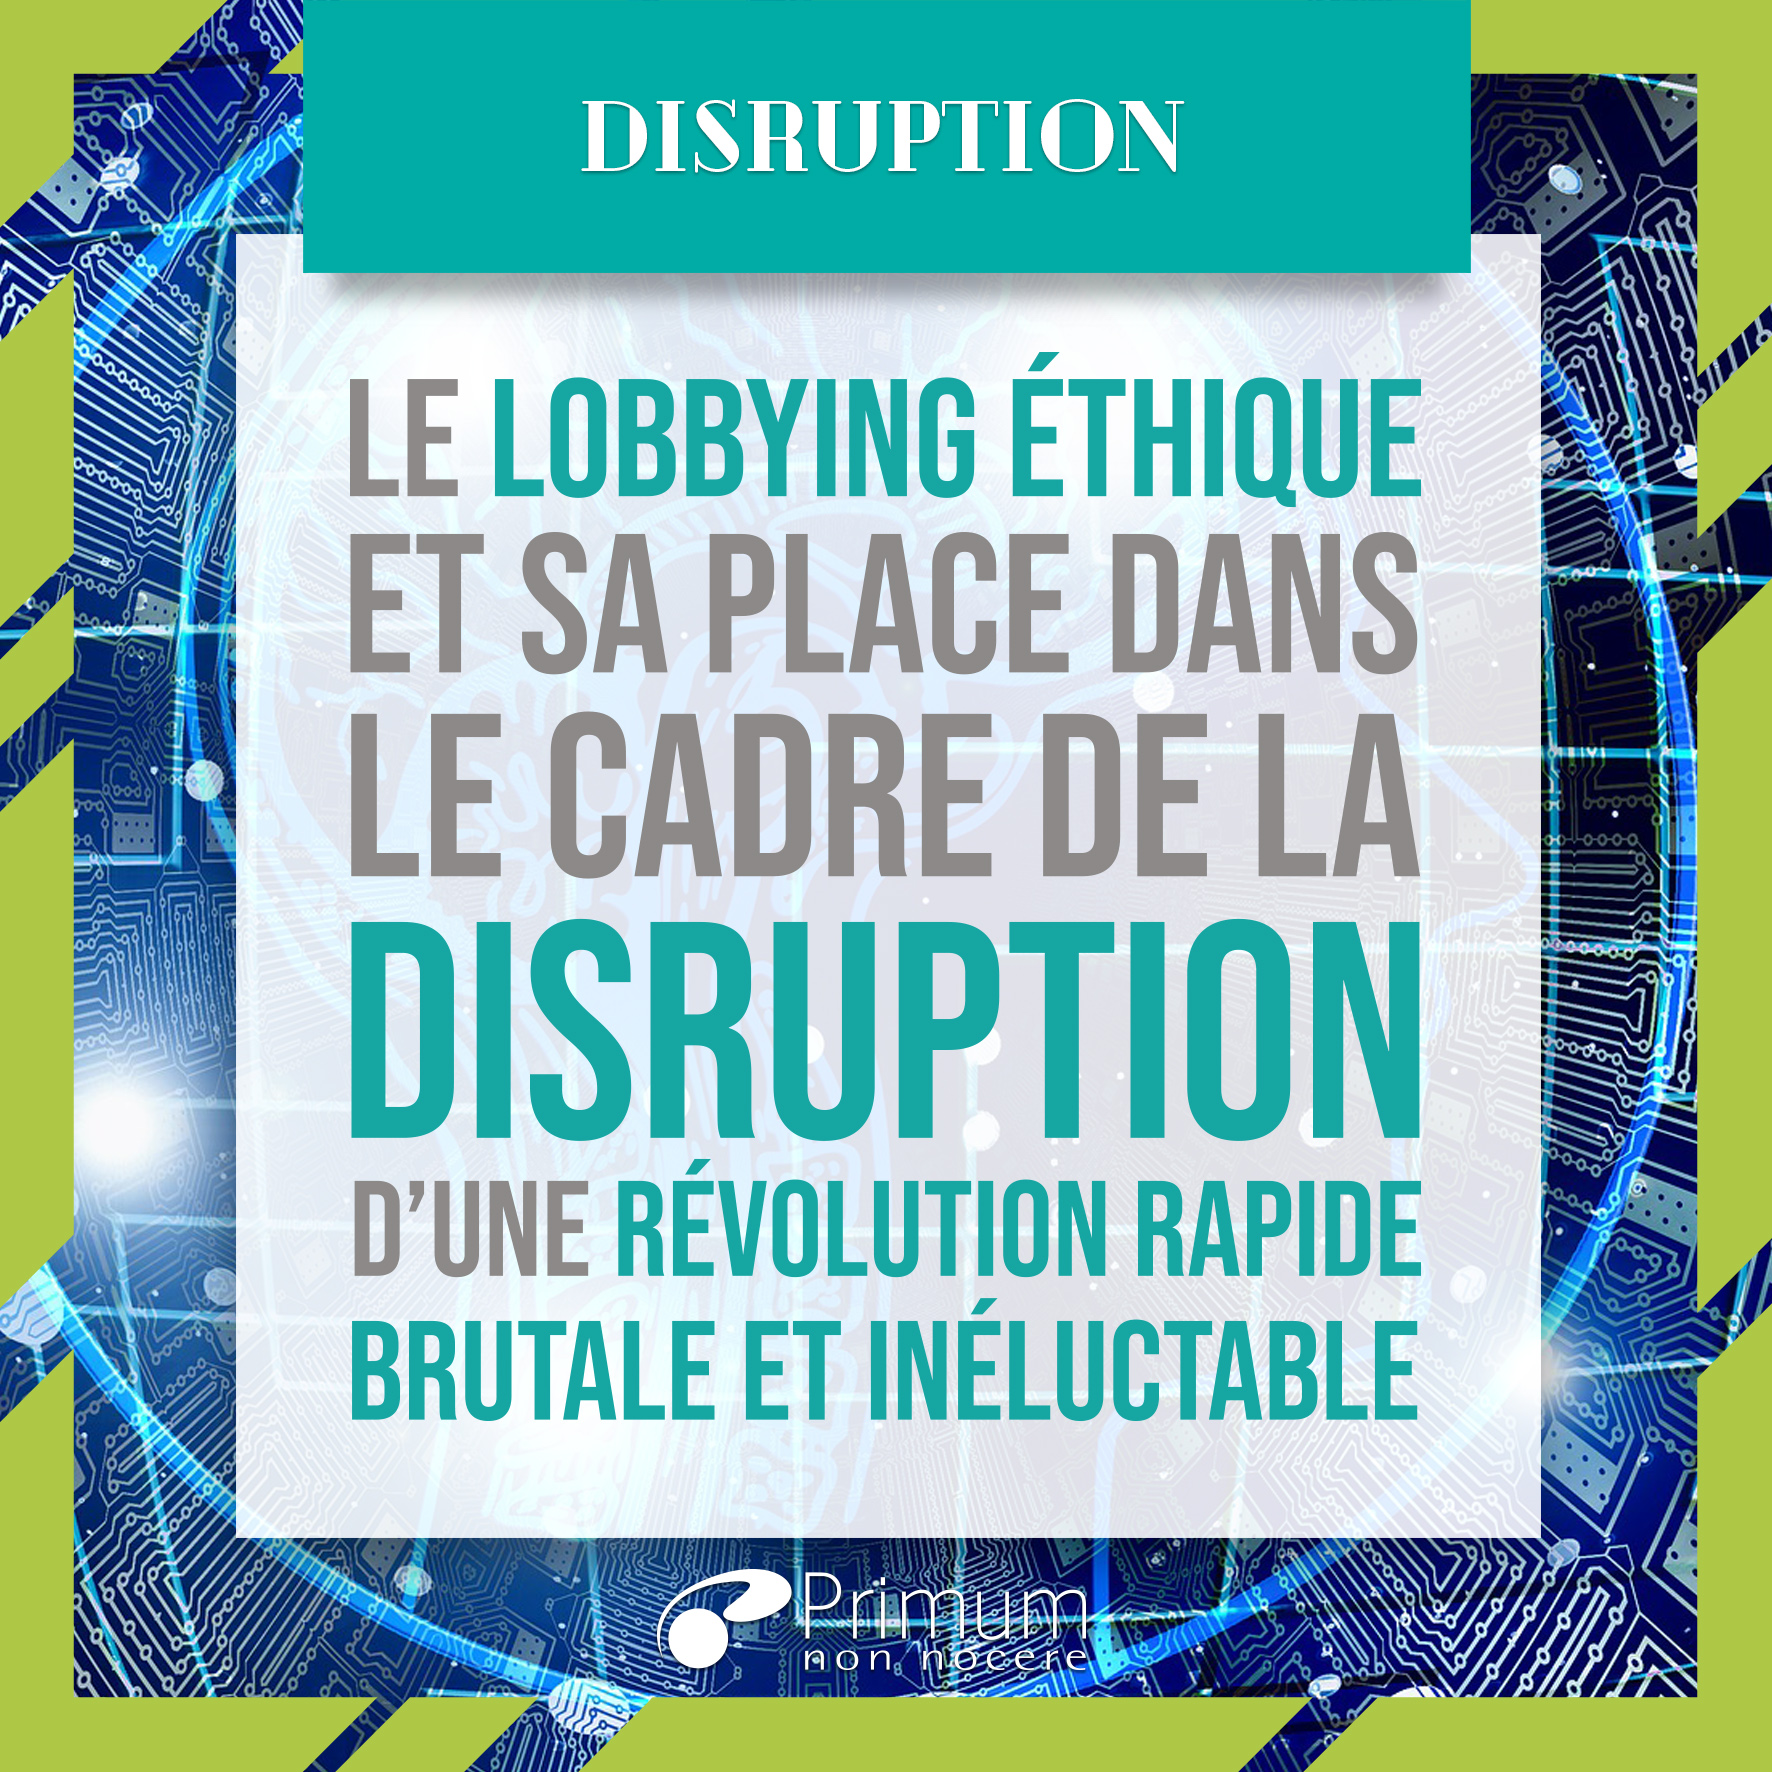 disruption et lobbying éthique